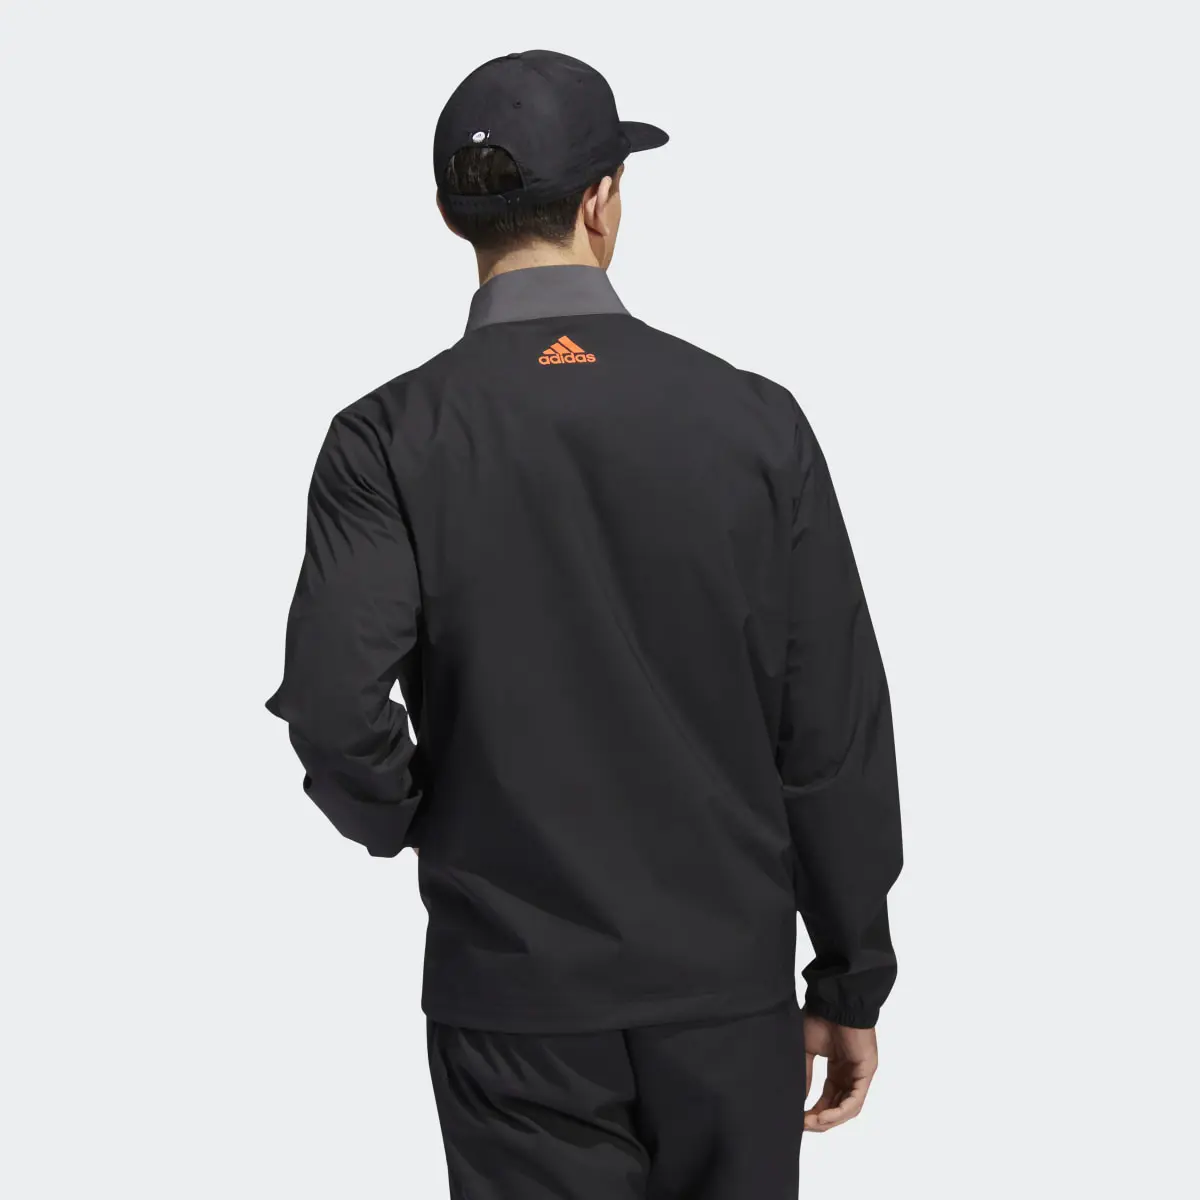 Adidas Provisional Full-Zip Golf Jacket. 3